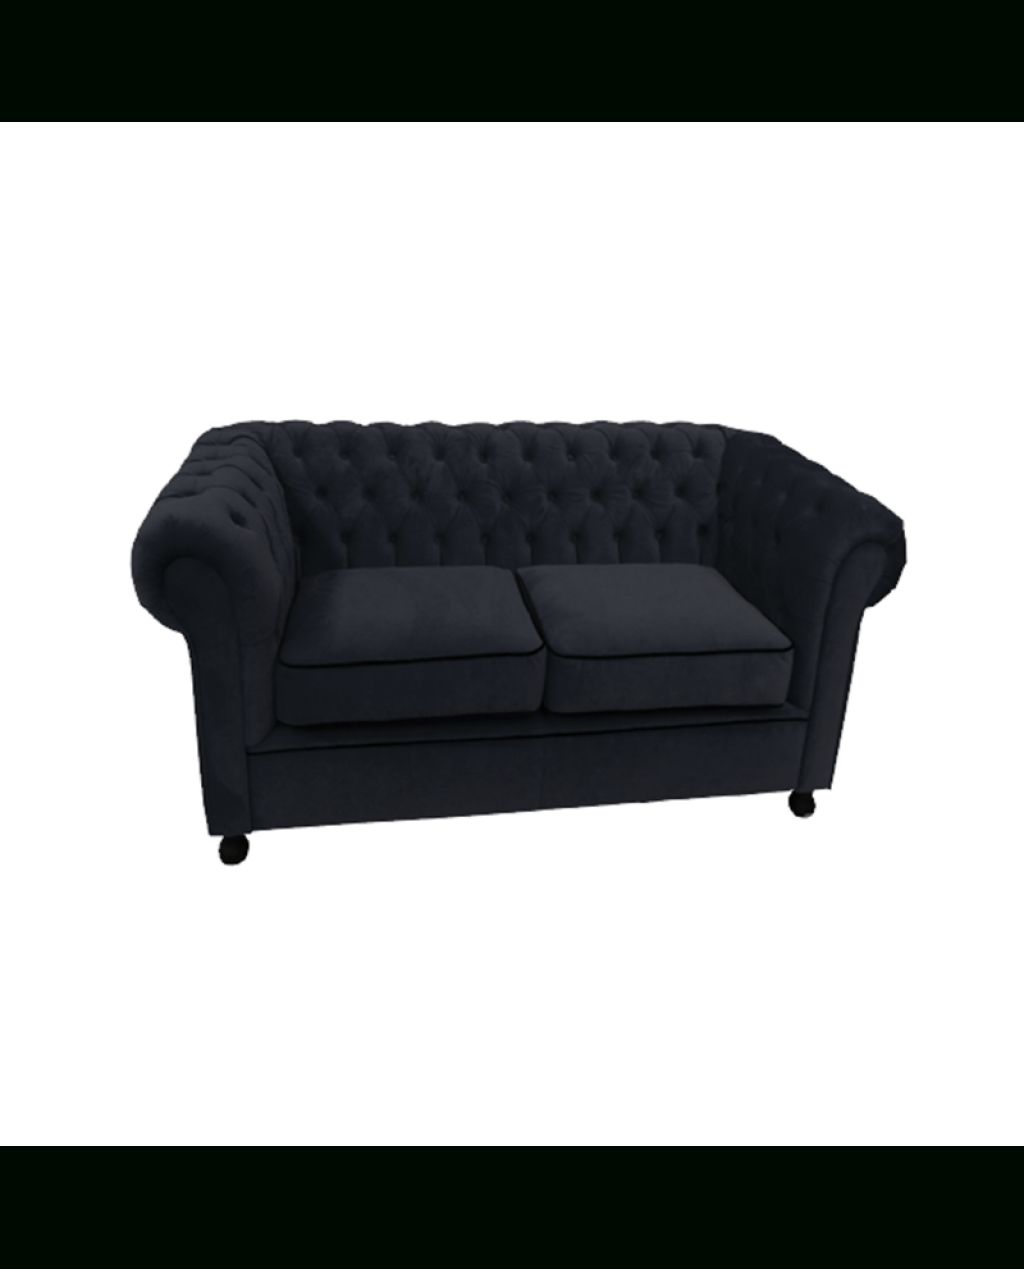 Most Popular Black Velvet Chesterfield Style 2 Seater Sofa Hire Inside Black 2 Seater Sofas (Photo 2 of 15)